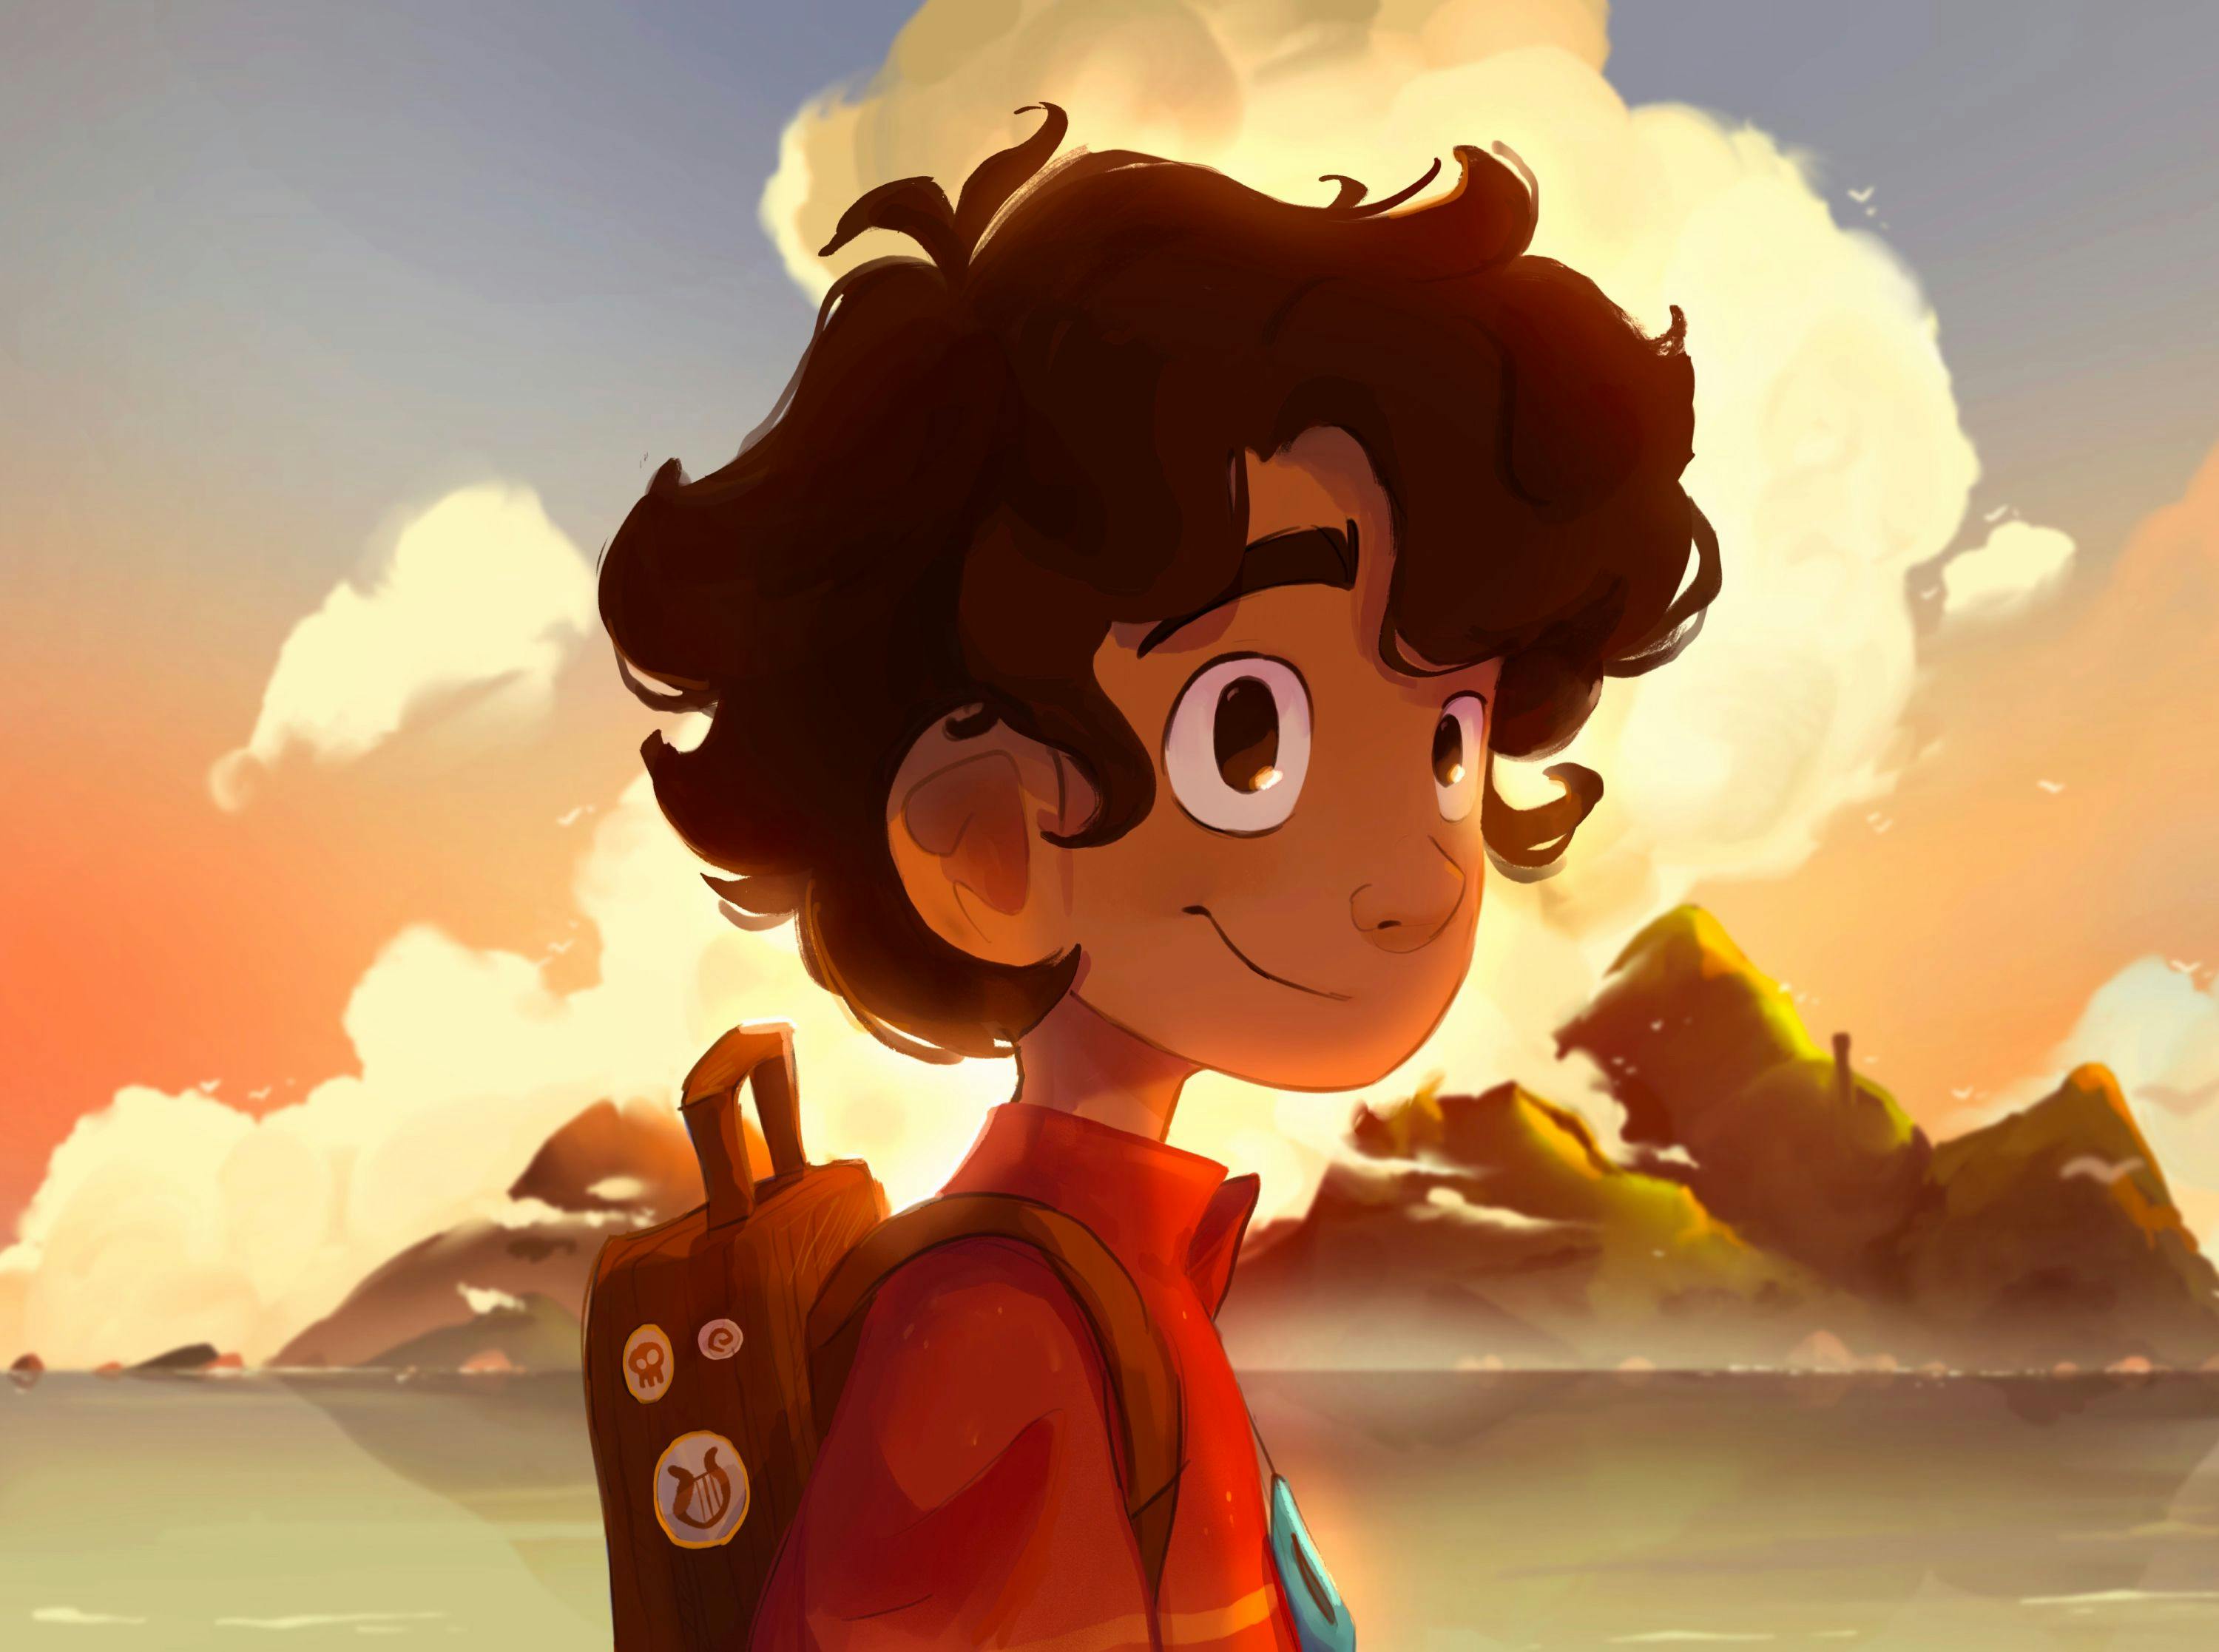 A boy looking toward the future